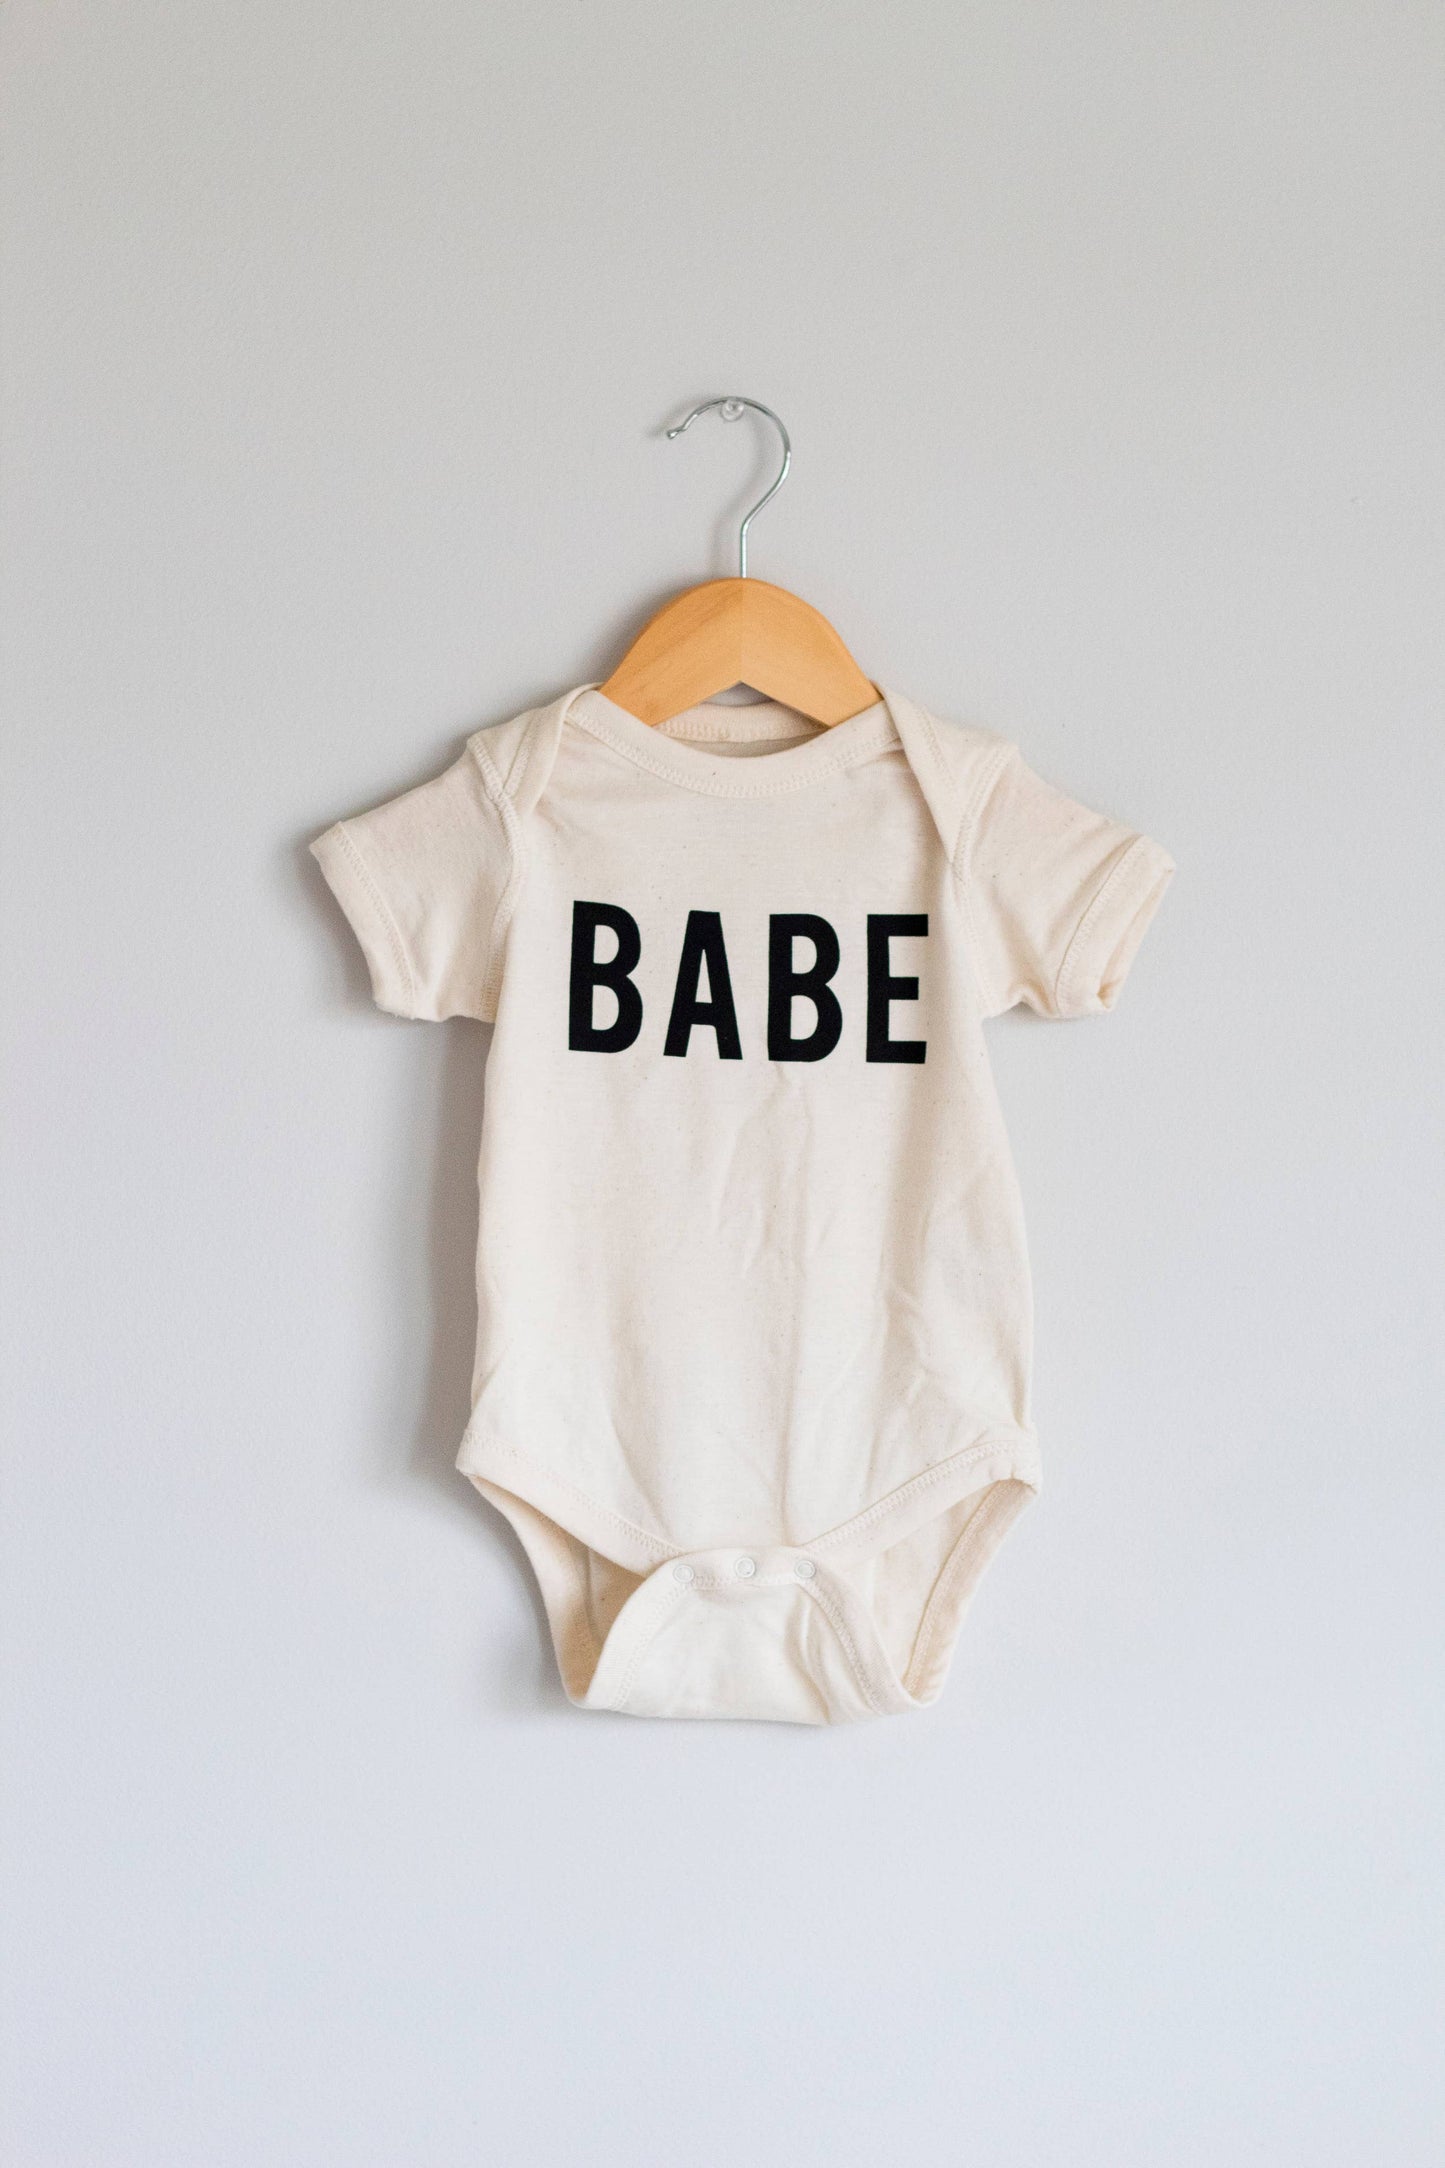 BABE Organic Cotton Infant Bodysuit, Printed baby onesie